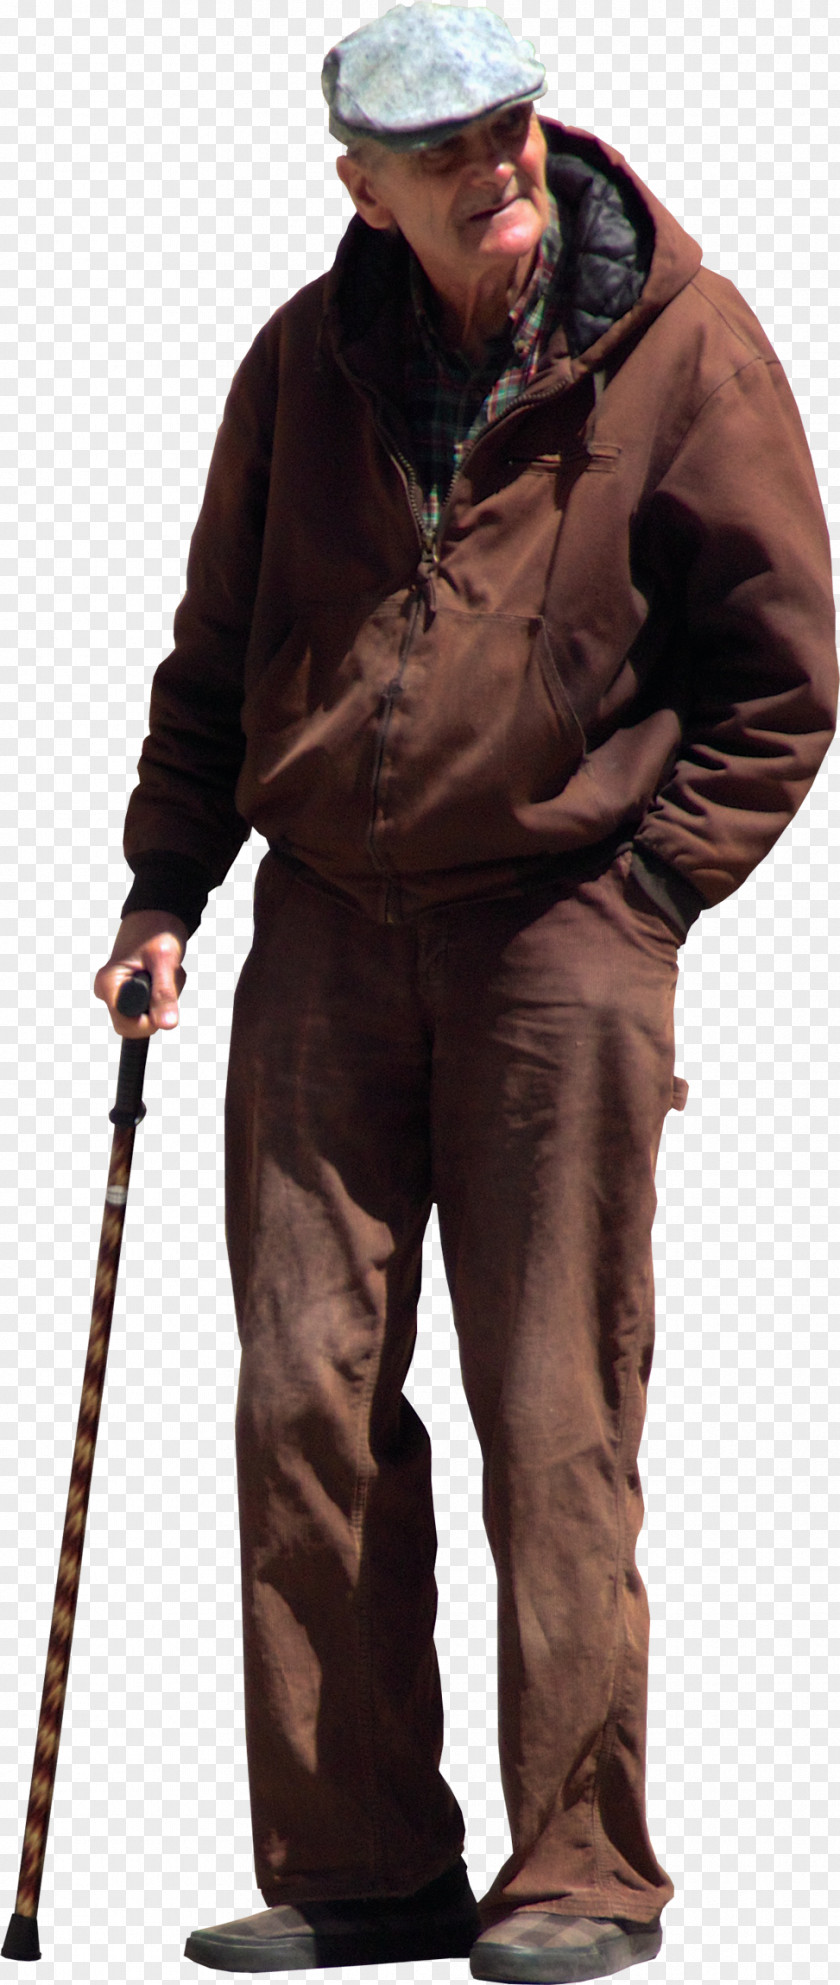 OLD MAN Old Age Walking Stick PNG